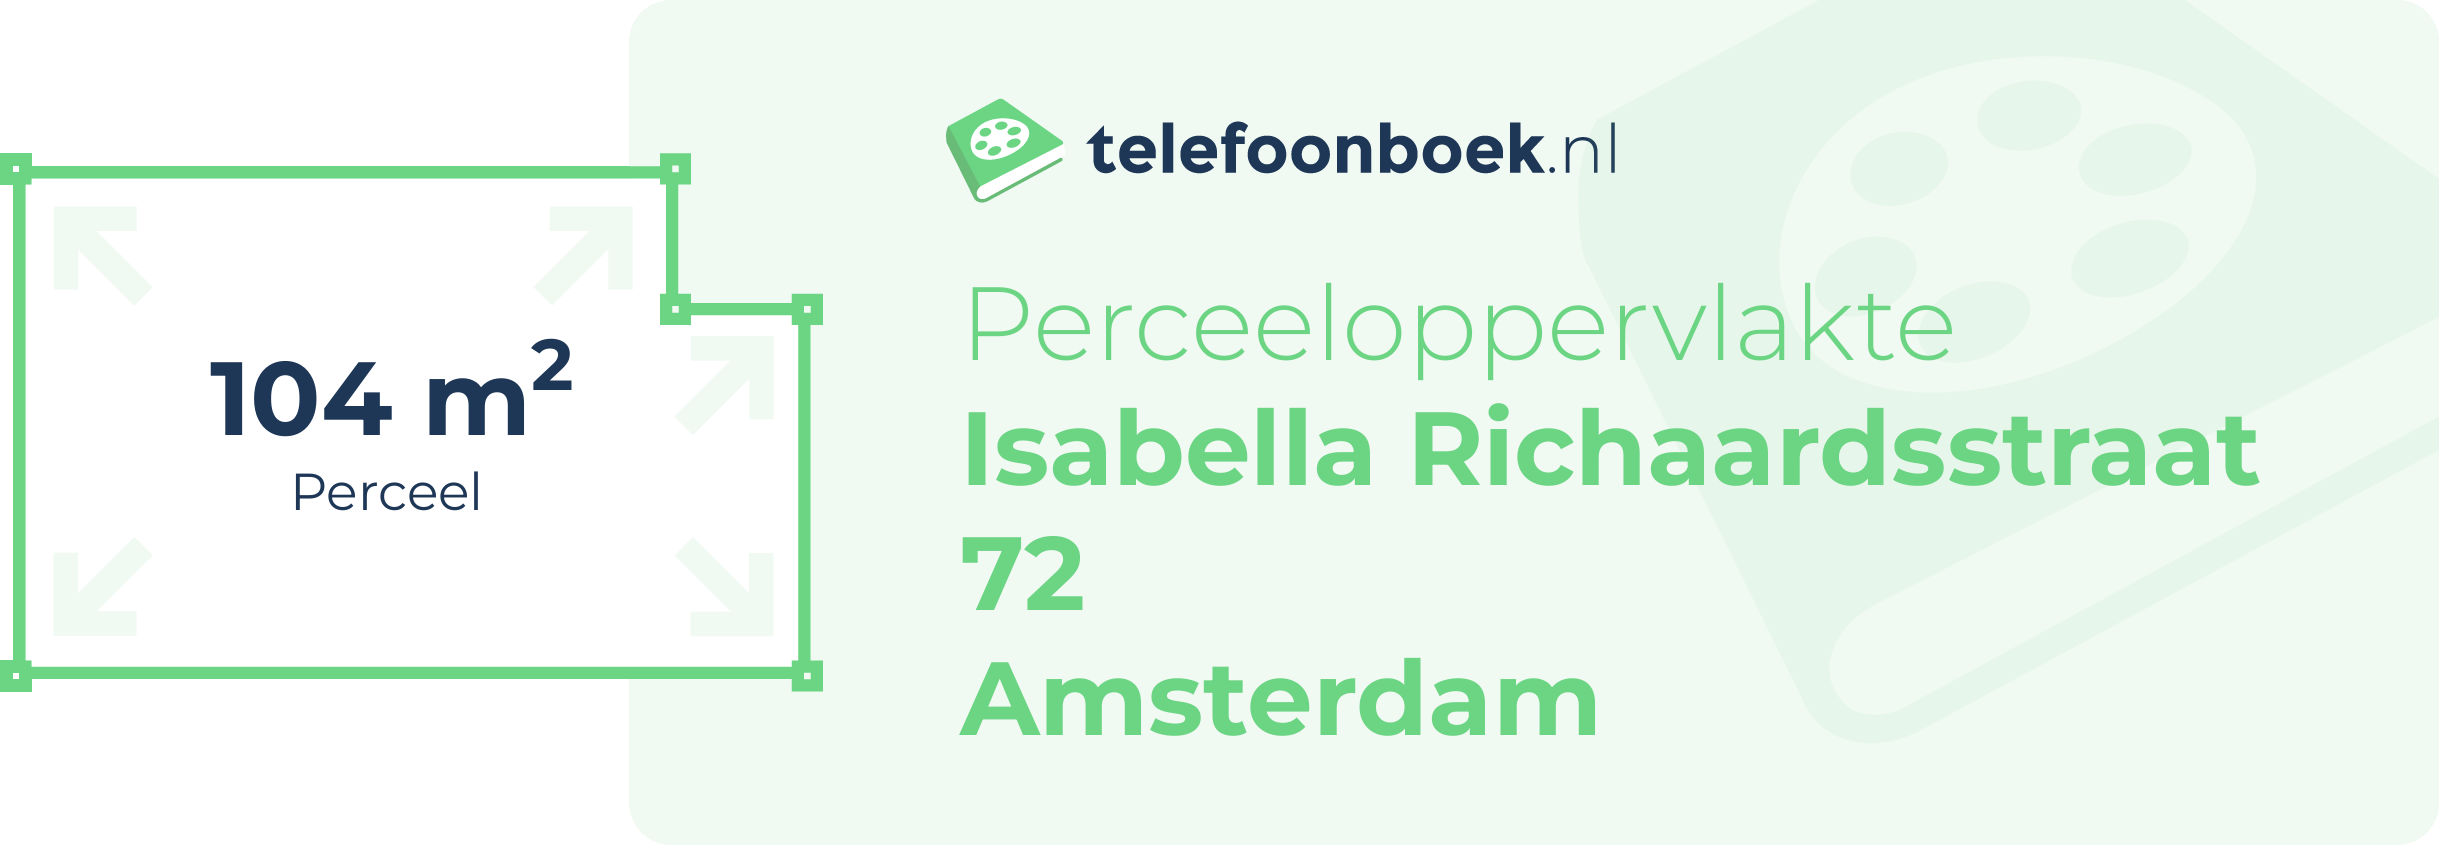 Perceeloppervlakte Isabella Richaardsstraat 72 Amsterdam